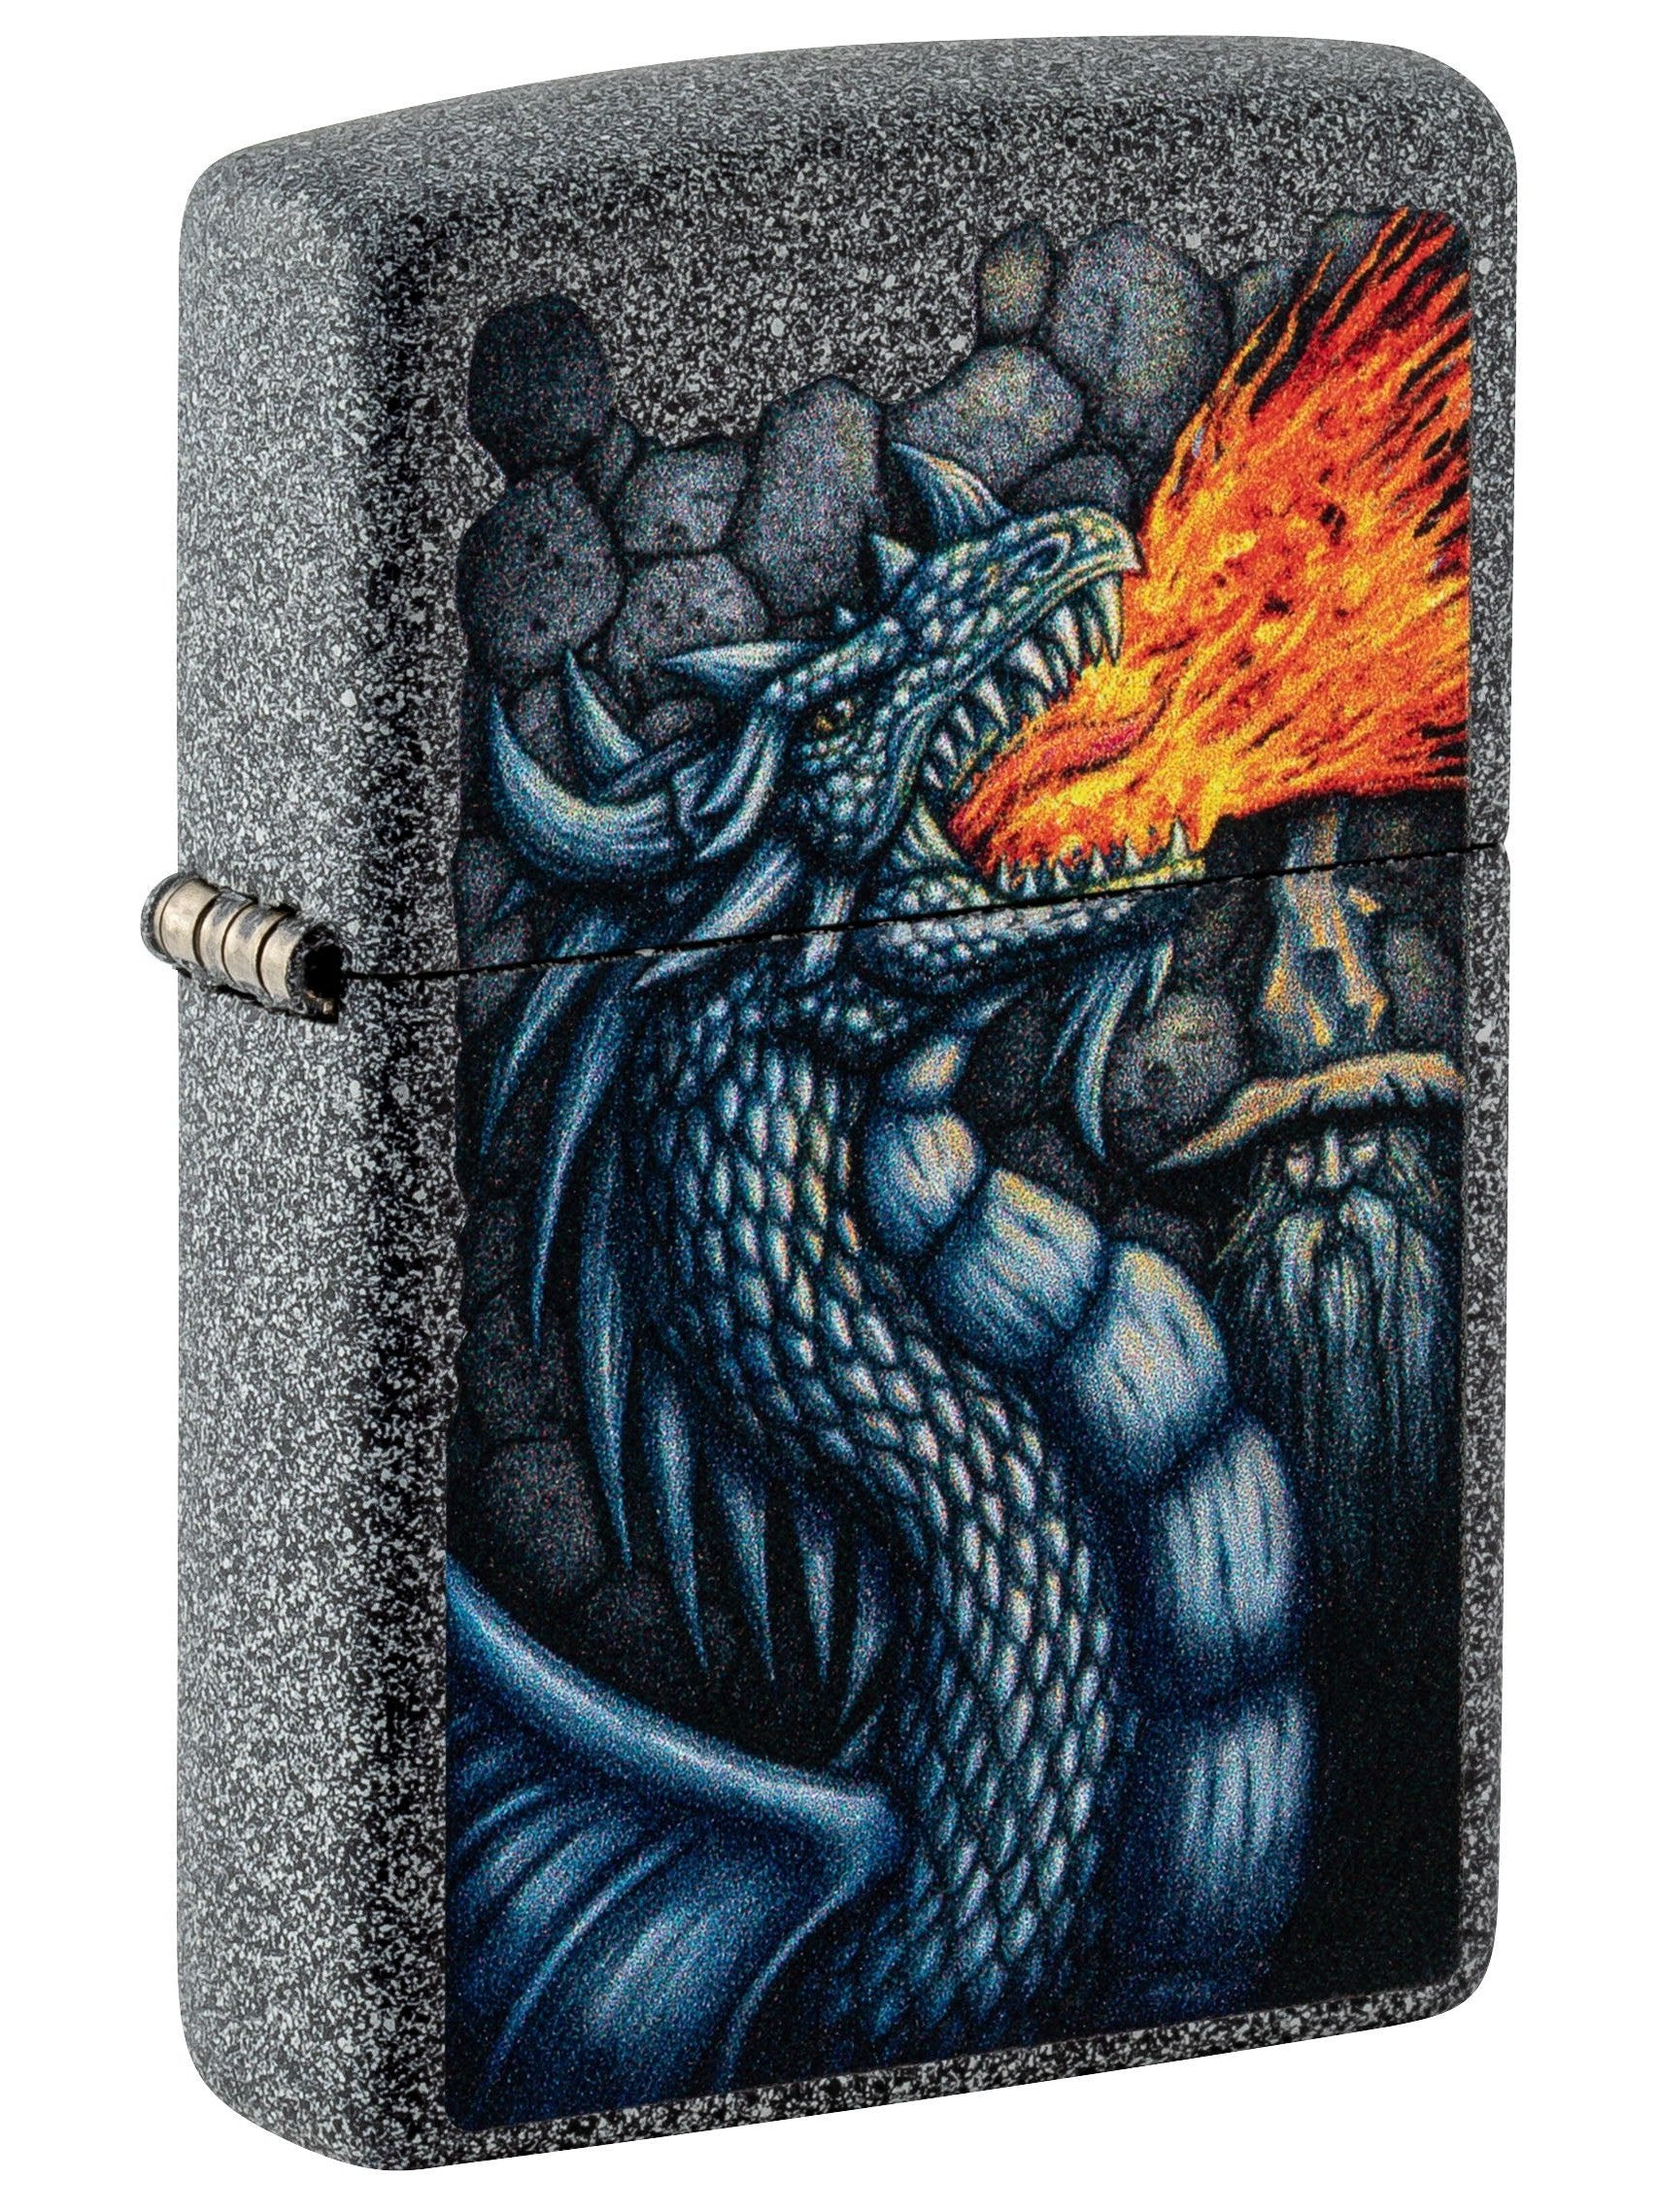 Zippo Lighter: Flaming Dragon - Iron Stone 49776